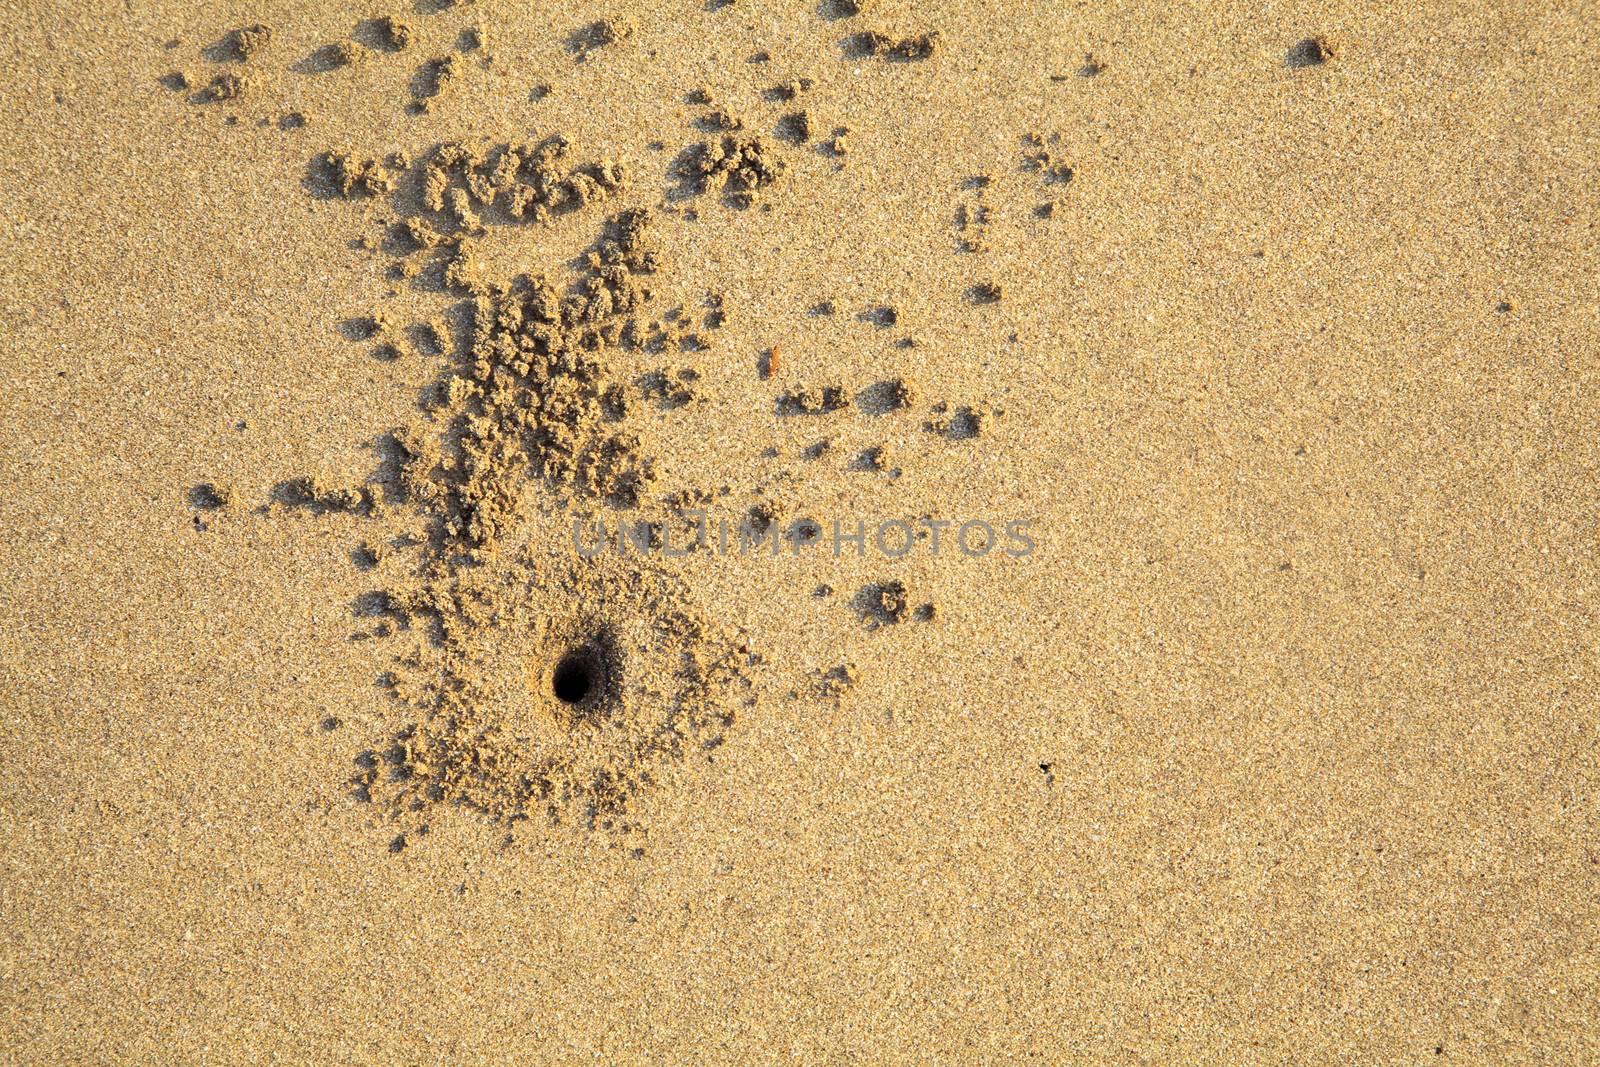 Ghost crab hole on Pondicherry Beach India by arfabita